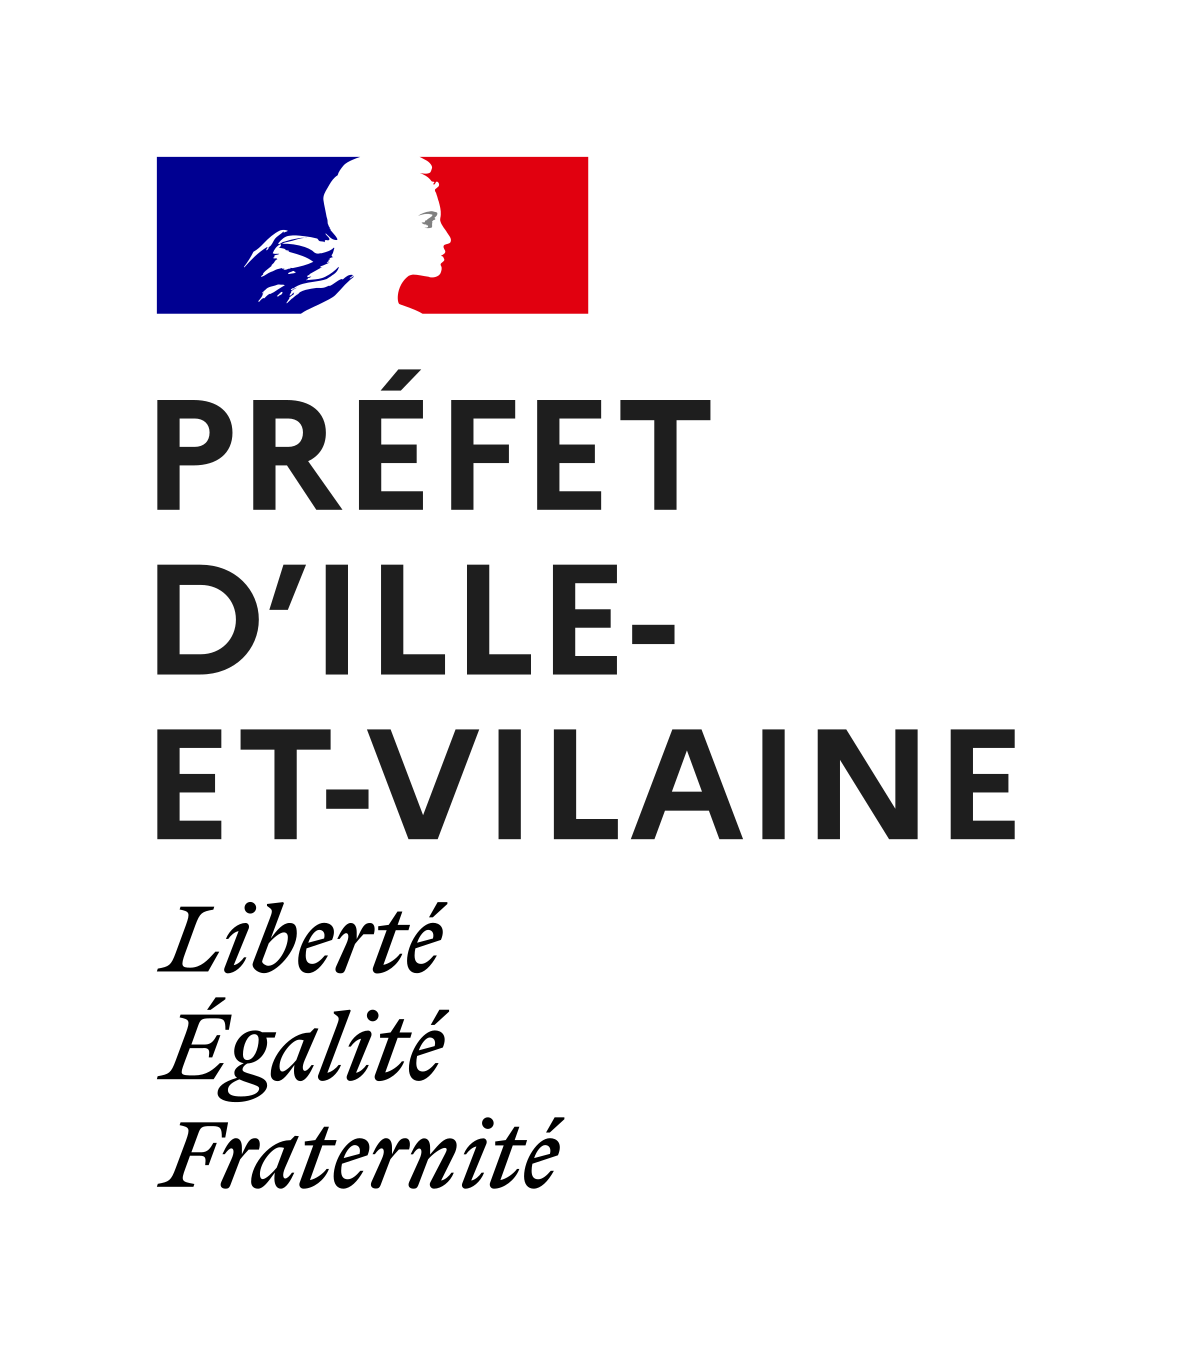 Logo préfecture